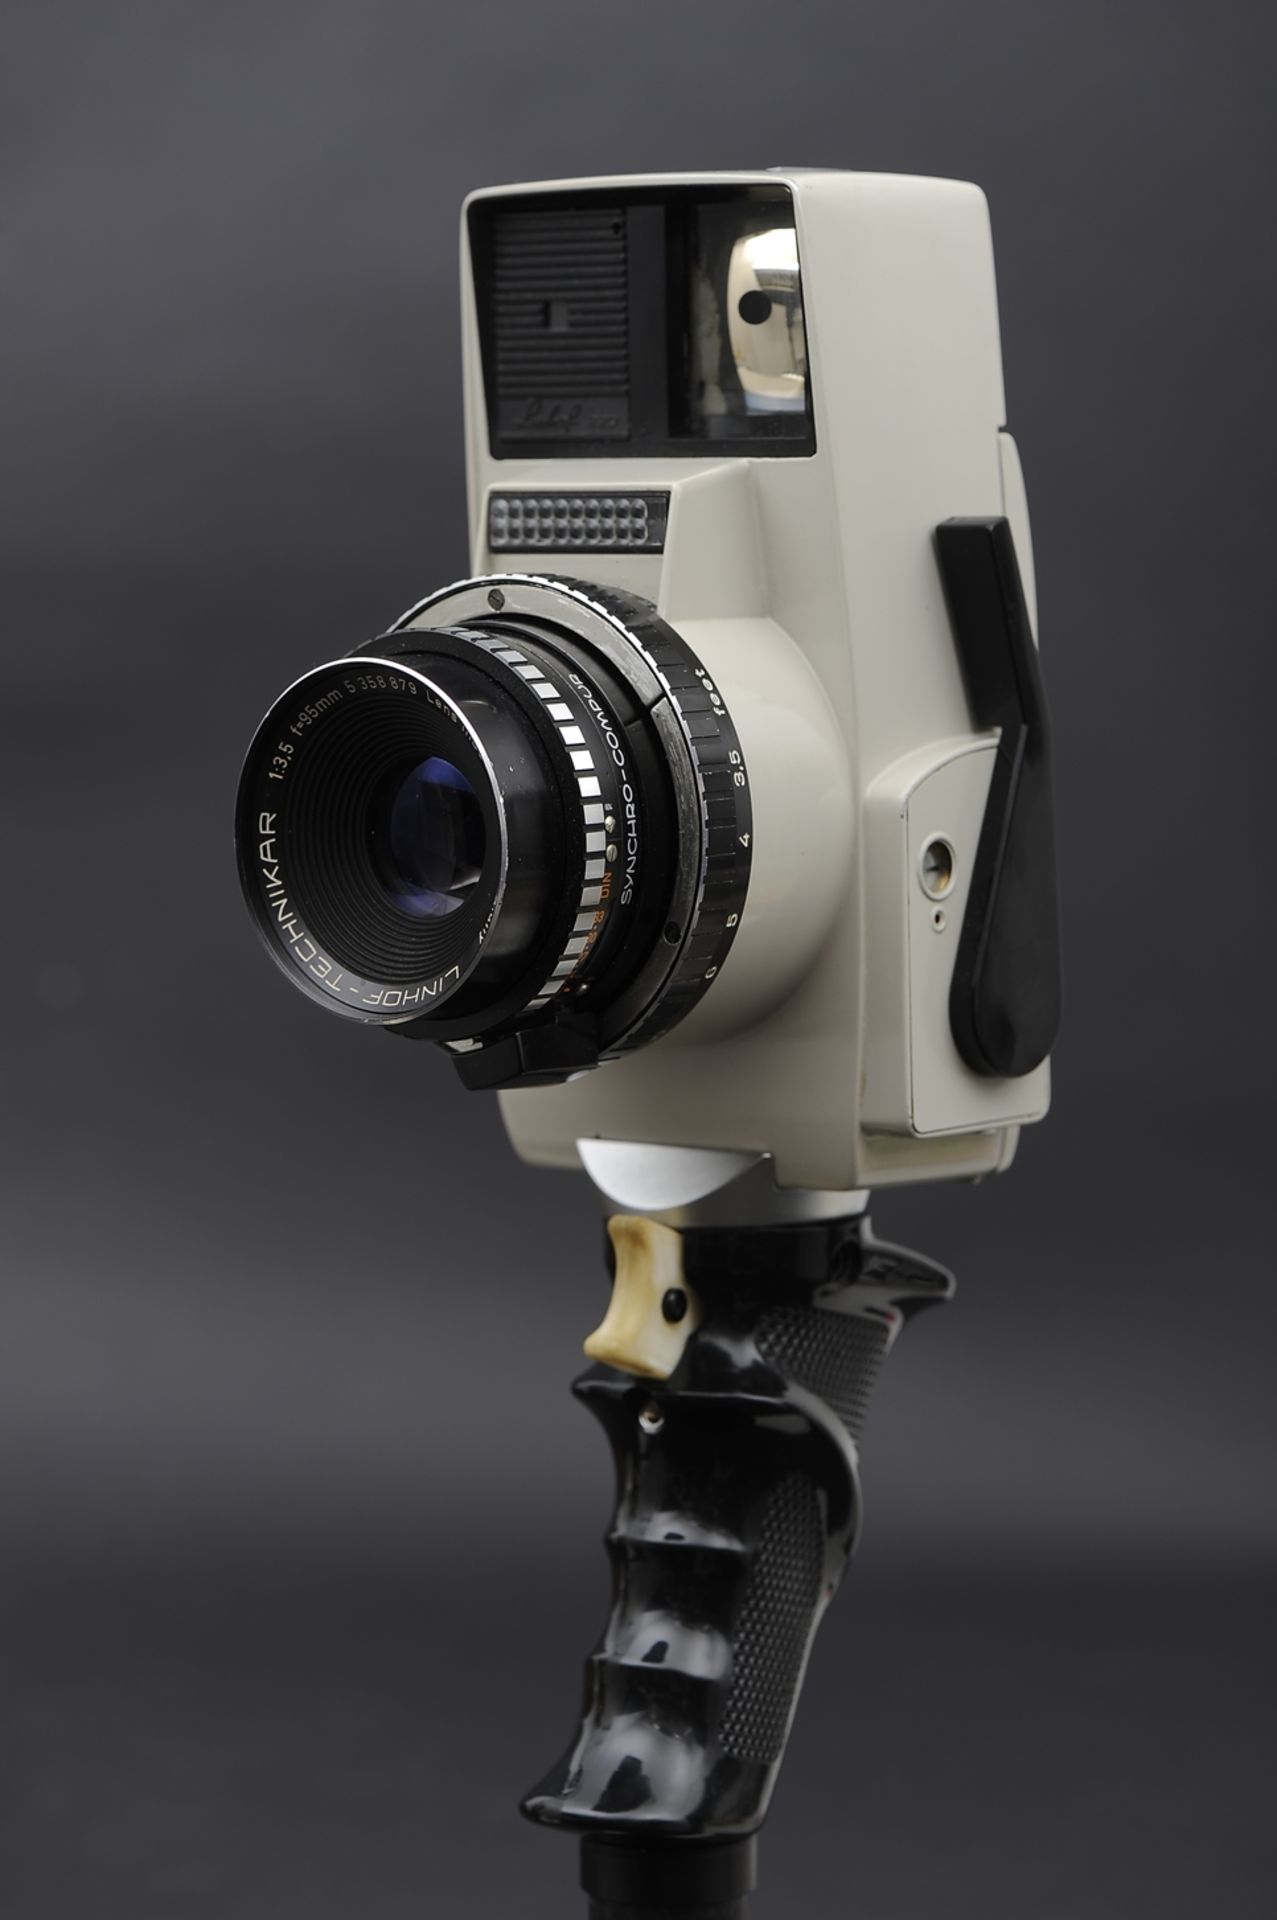 LINHOF 220 Kamera mit Pistolengriff, Linhof-Technikar Objektiv1:3,5, f=95 mm, No. 5358879. Ungeprüf